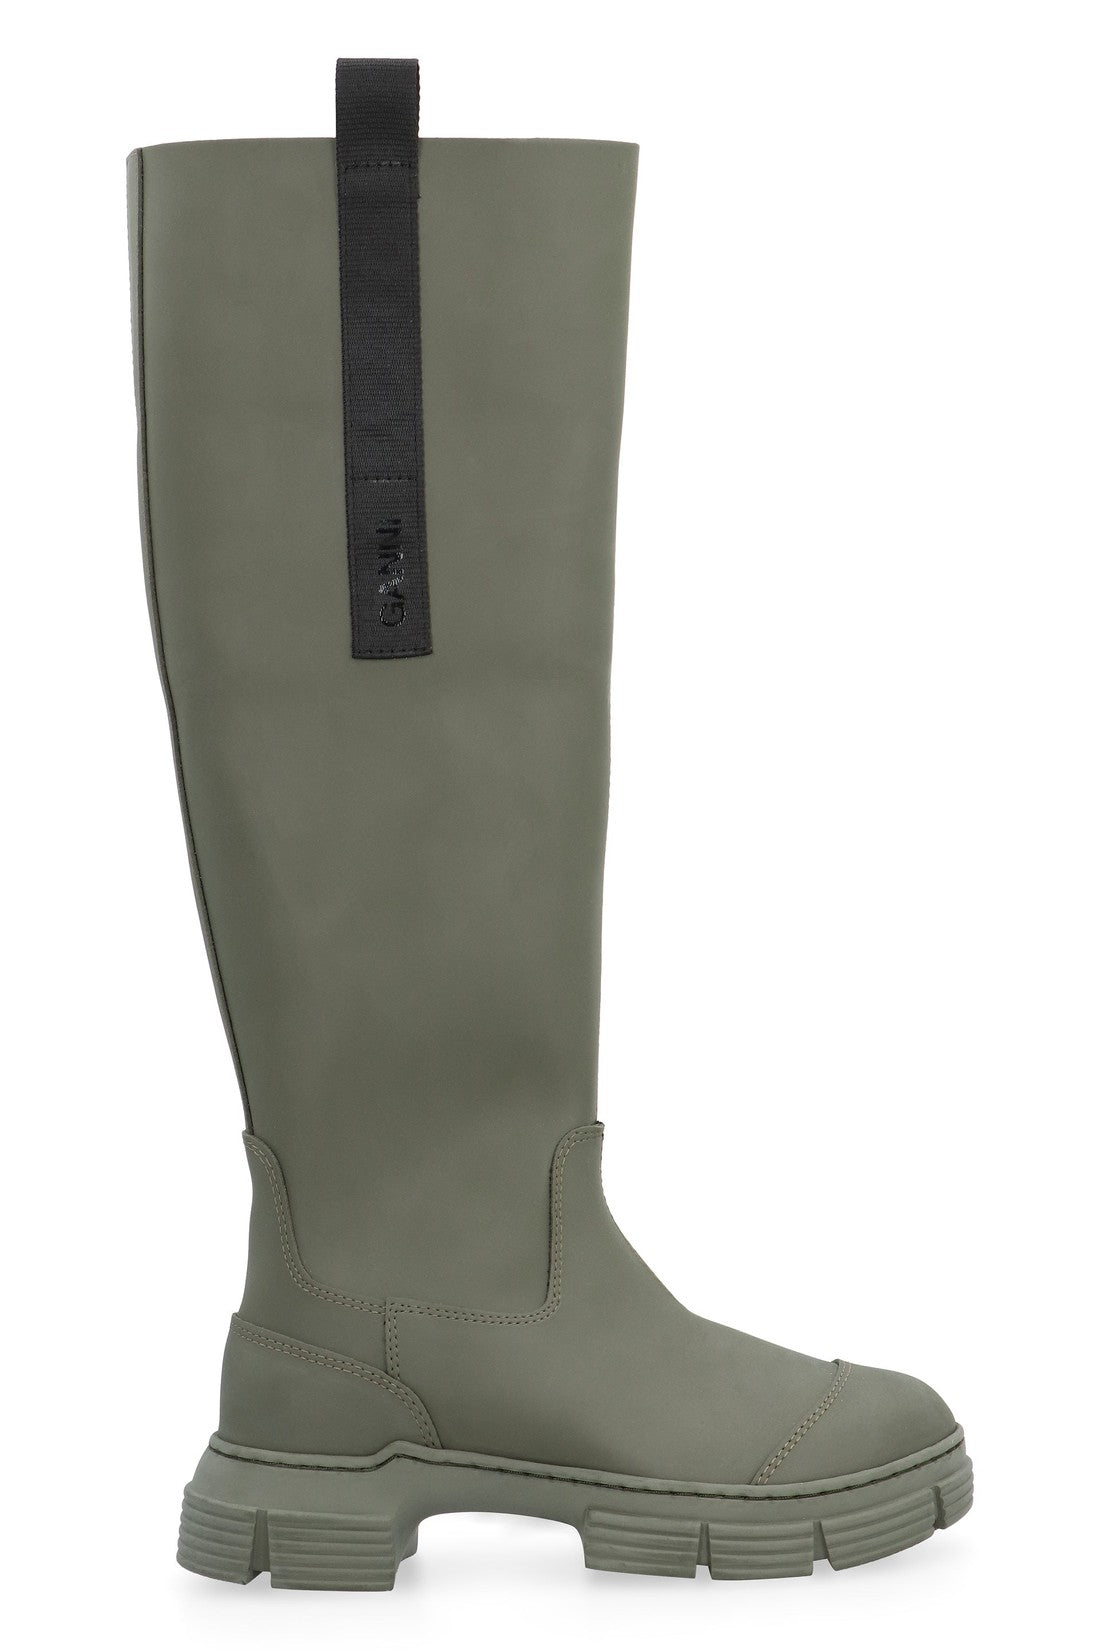 GANNI-OUTLET-SALE-Country rubber boots-ARCHIVIST